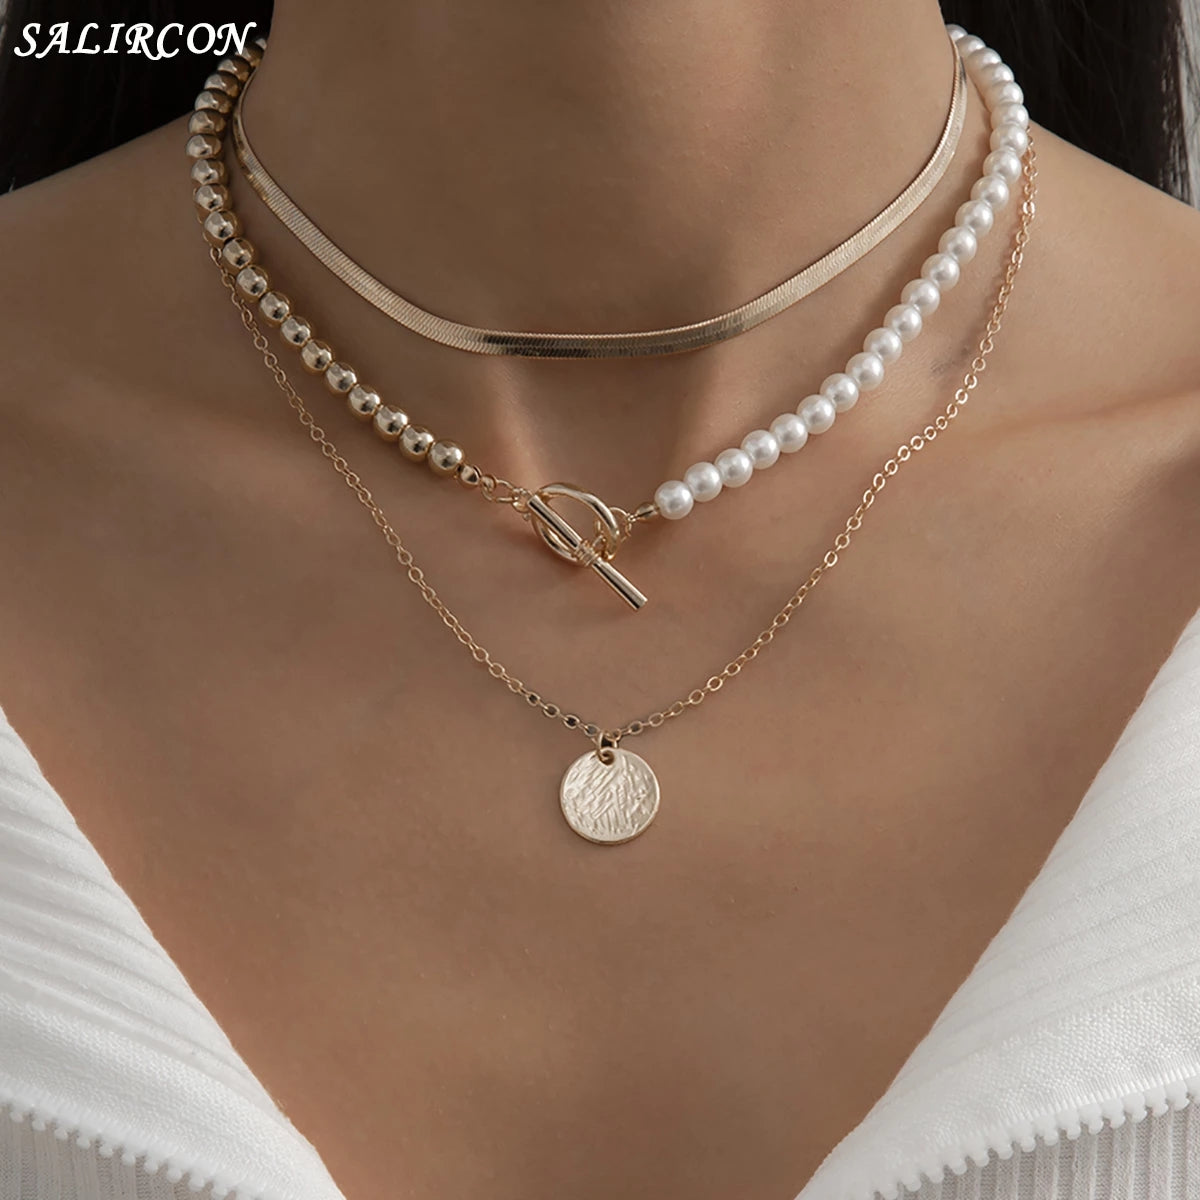 Salircon Layered Necklace